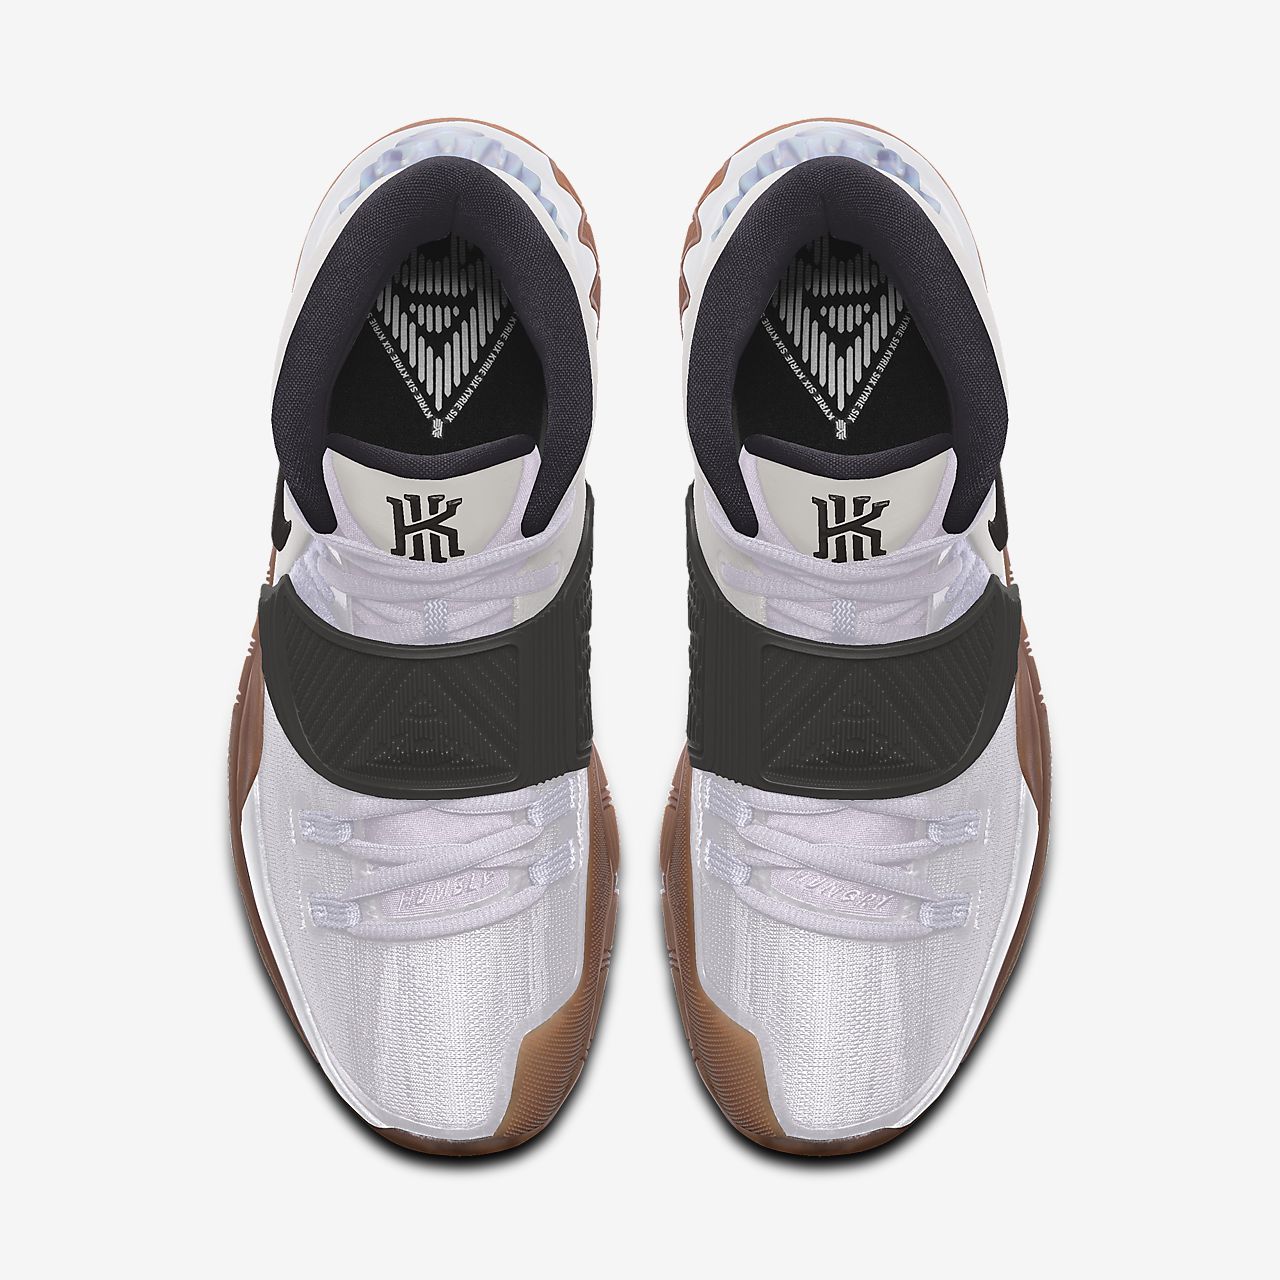 nike id customize basketball shoes